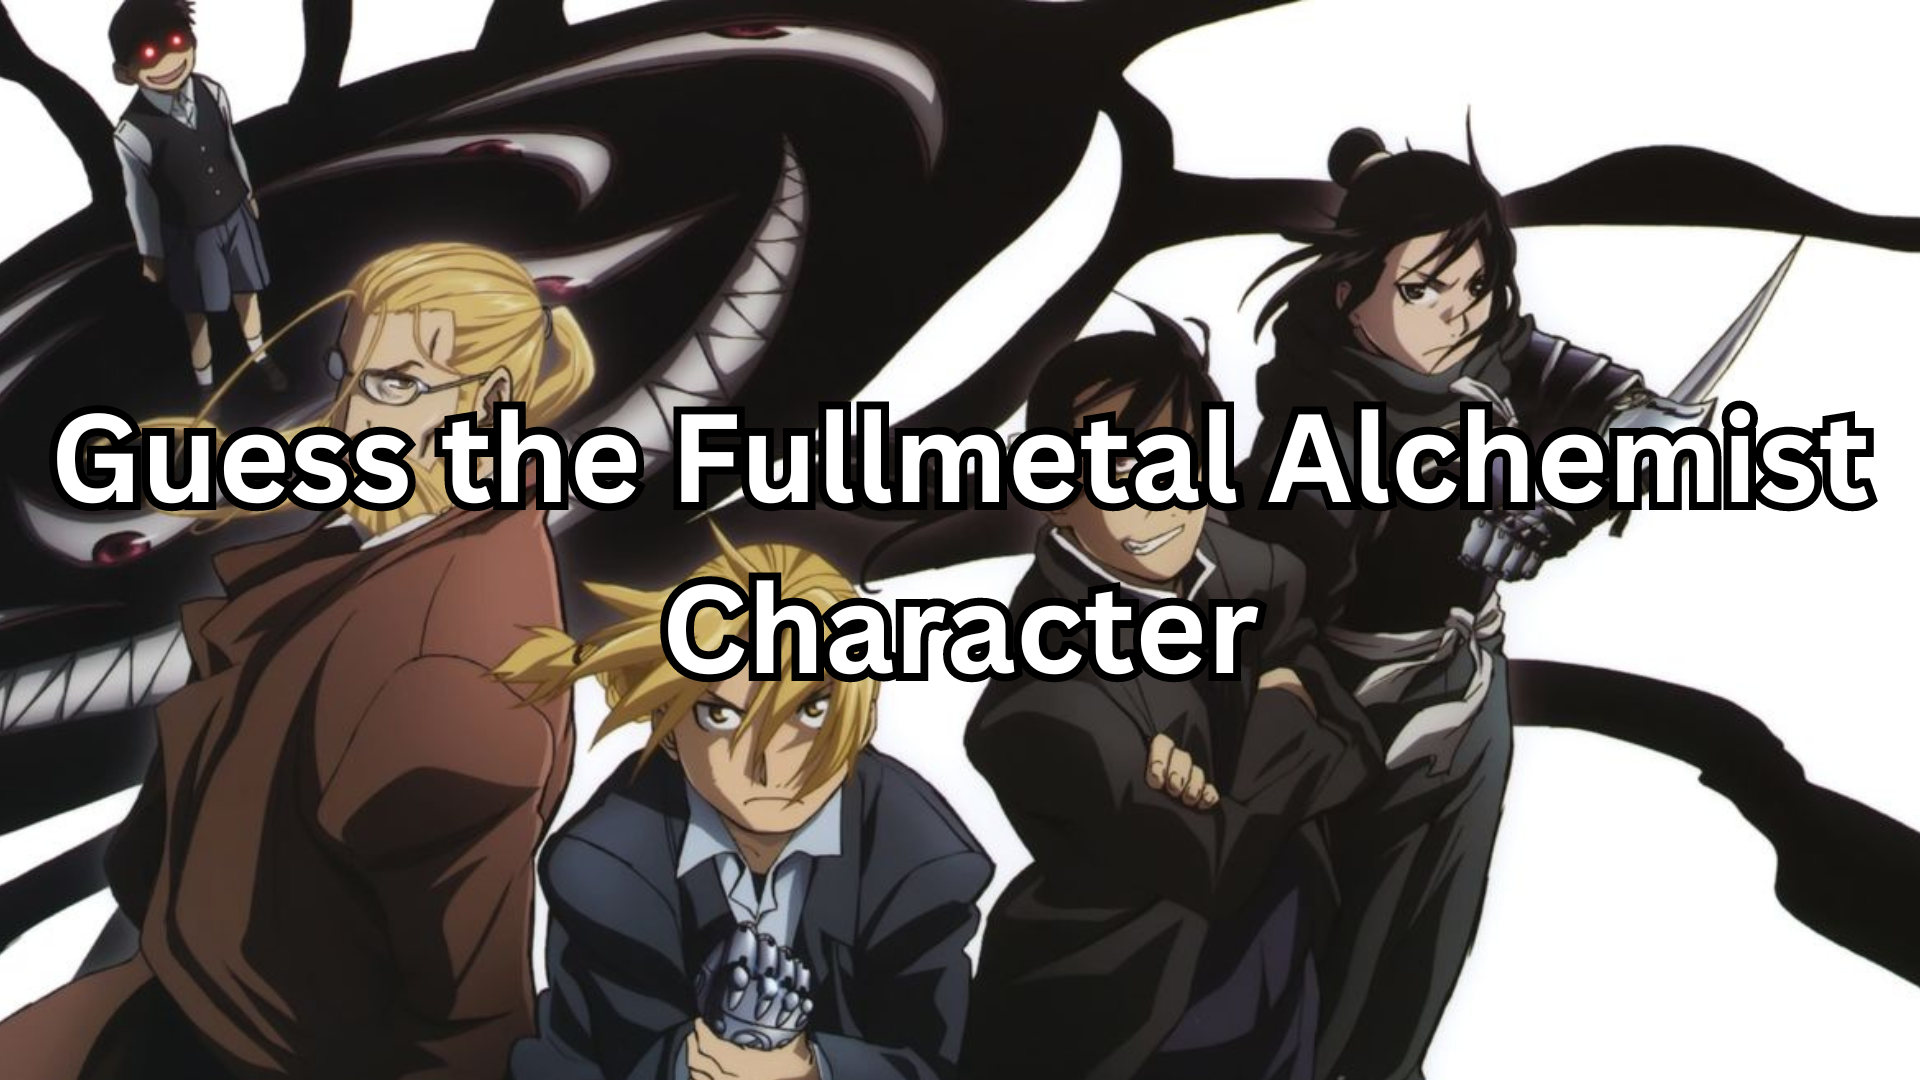 Guess the Fullmetal Alchemist Character